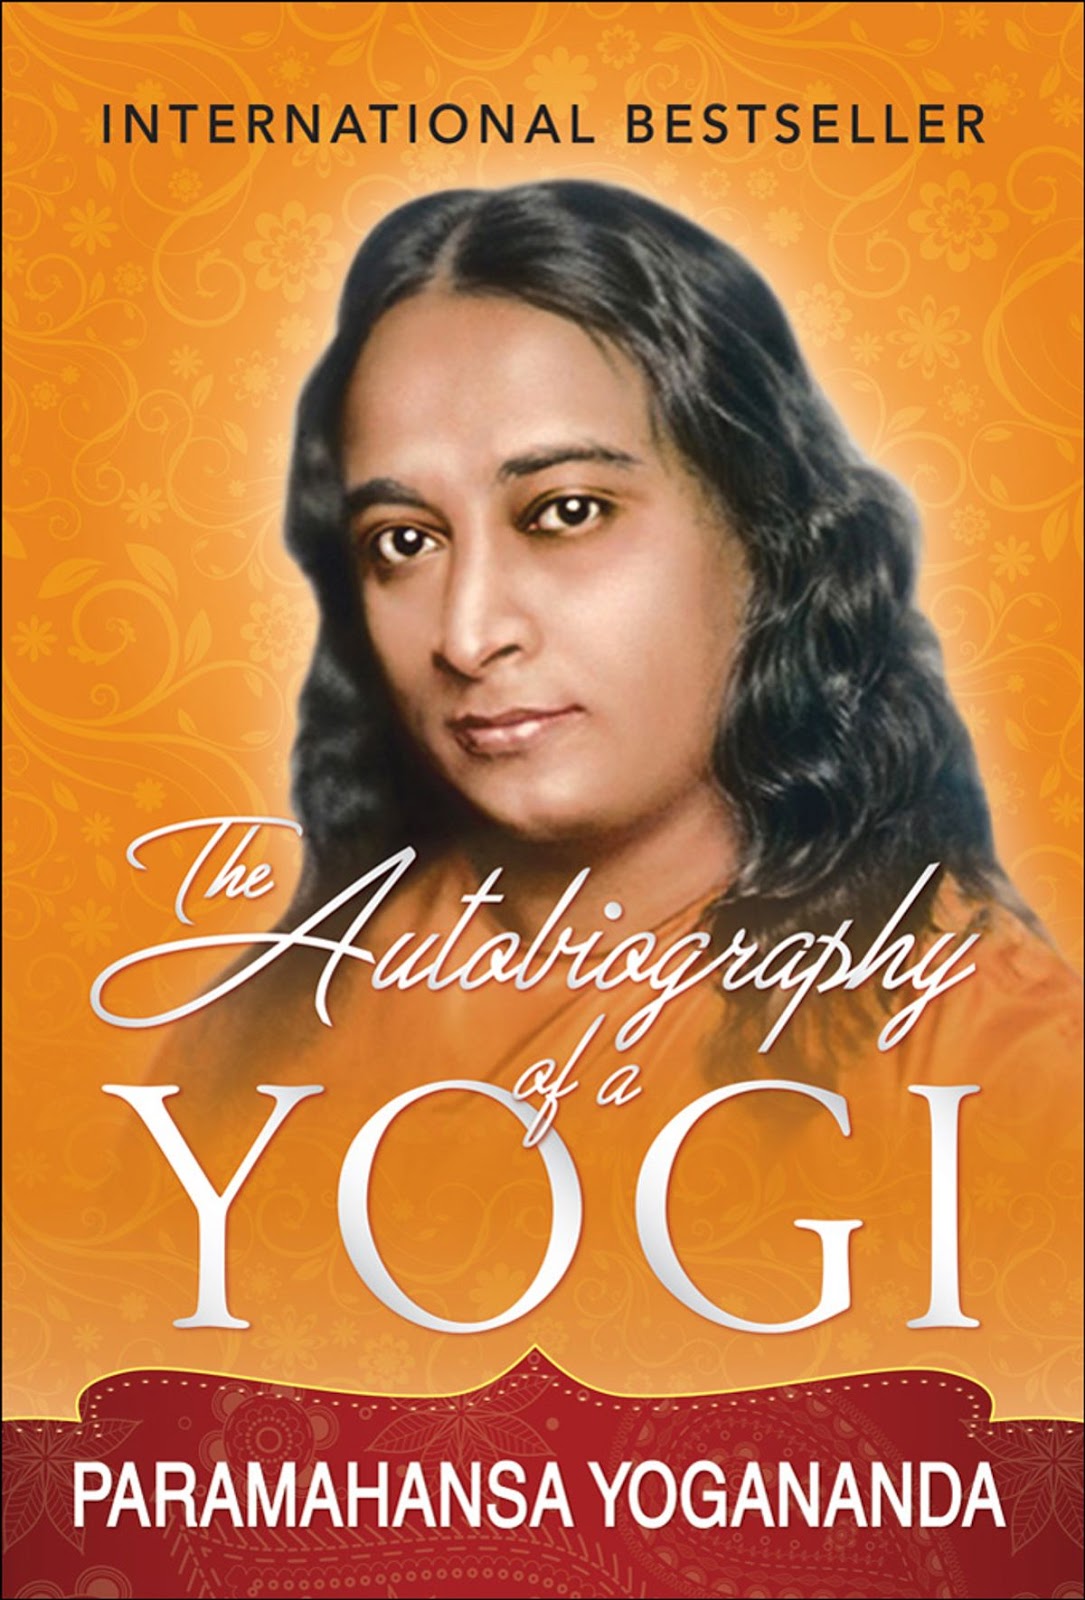 autobiography of yogi kannada